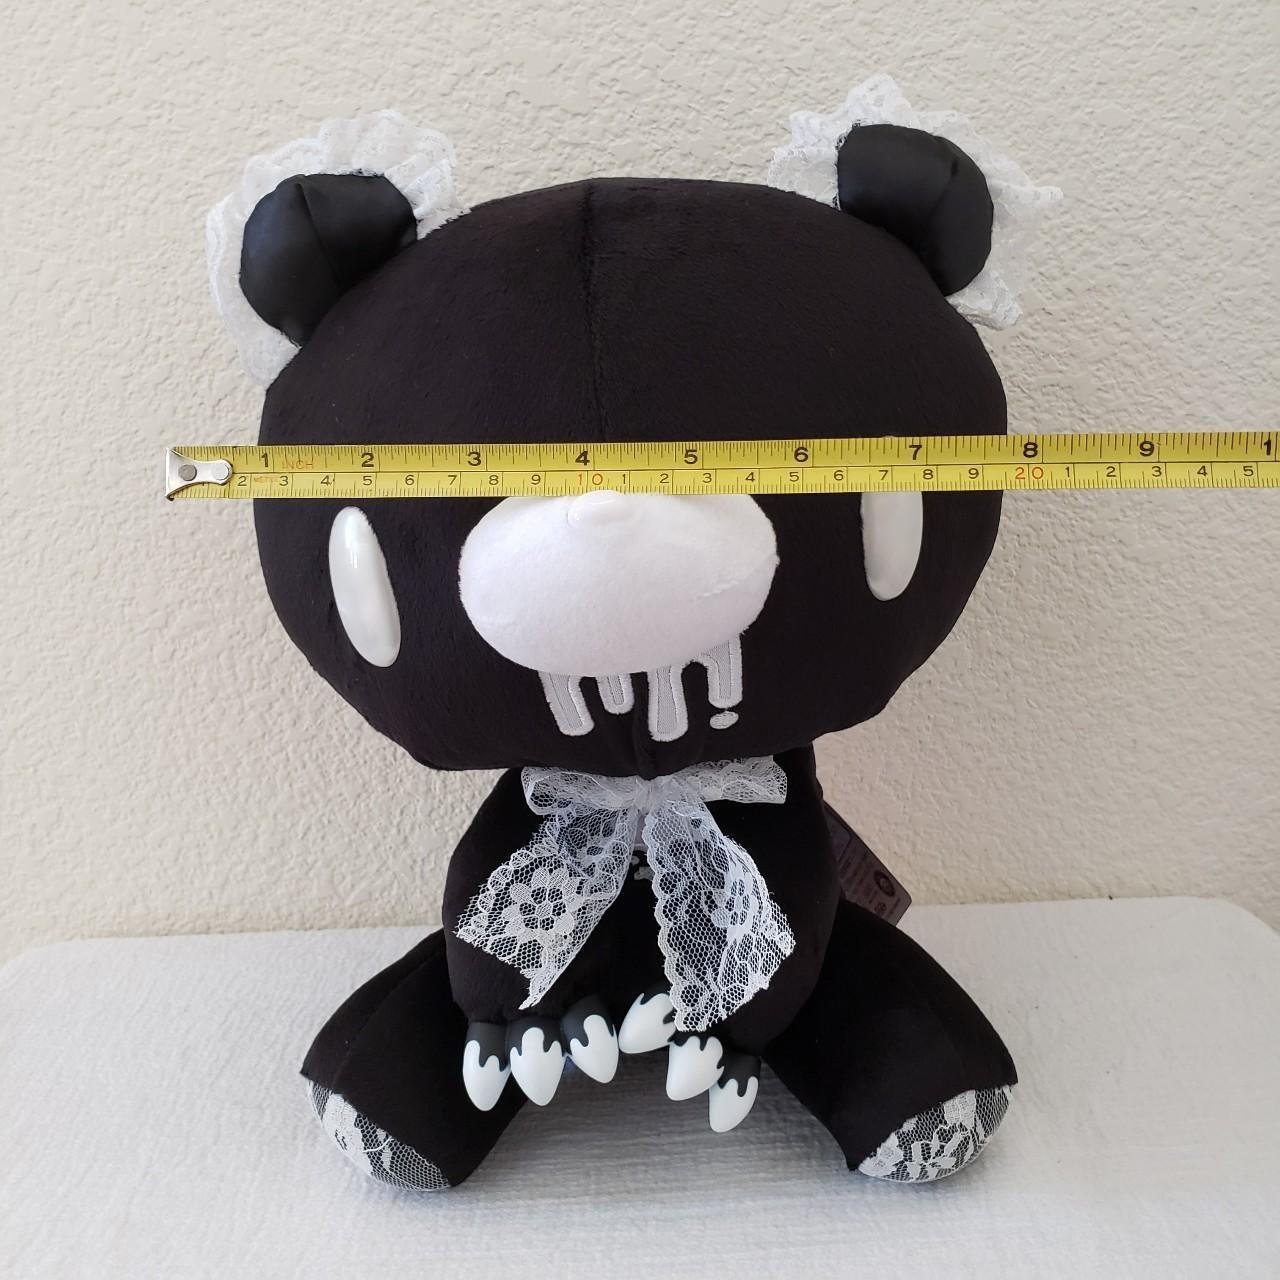 Product Image 3 - Lace Gloomy Bear Plush
Black

This version